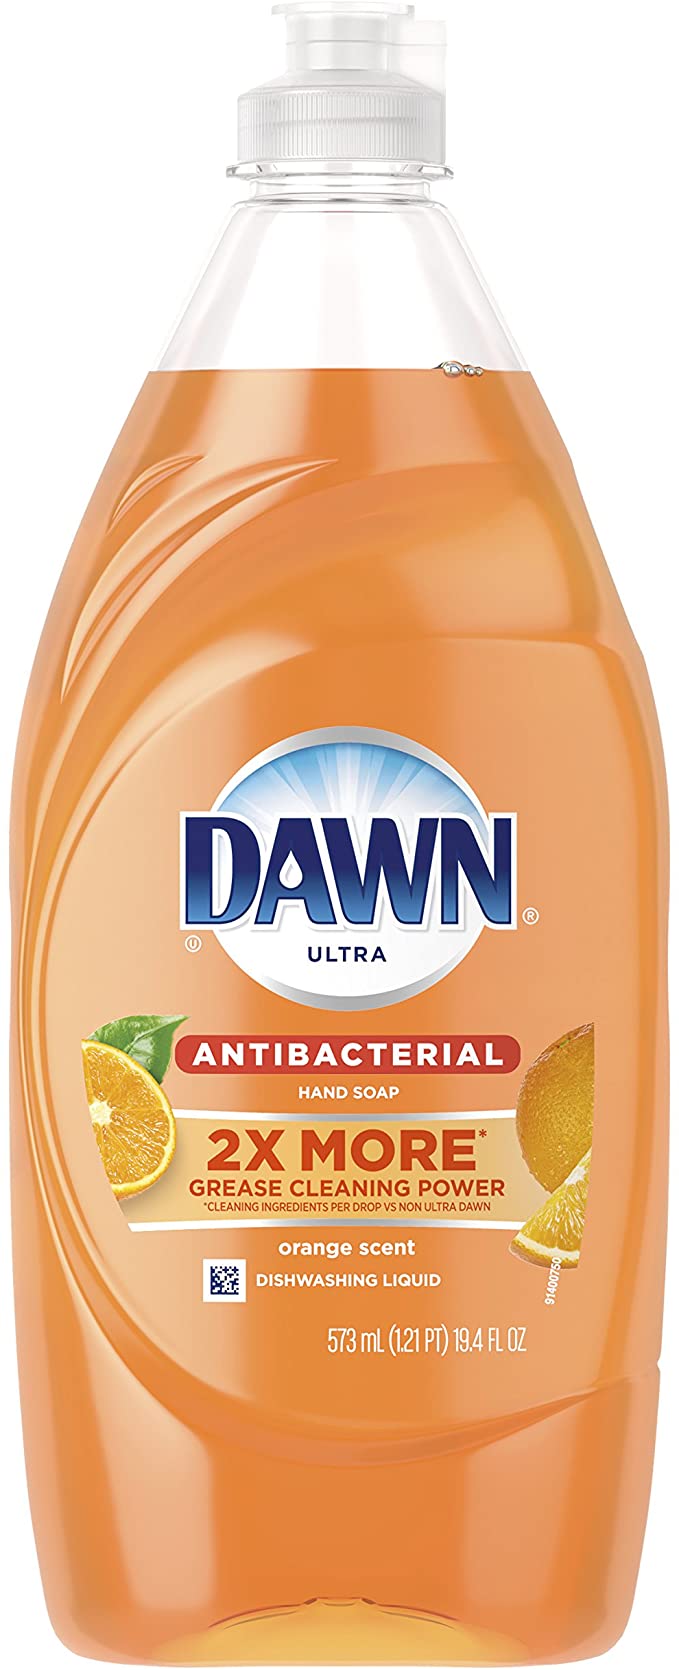 Dawn Ultra Antibacterial Hand Soap, Dishwashing Liquid Dish Soap, Orange Scent, 19.4 fl oz